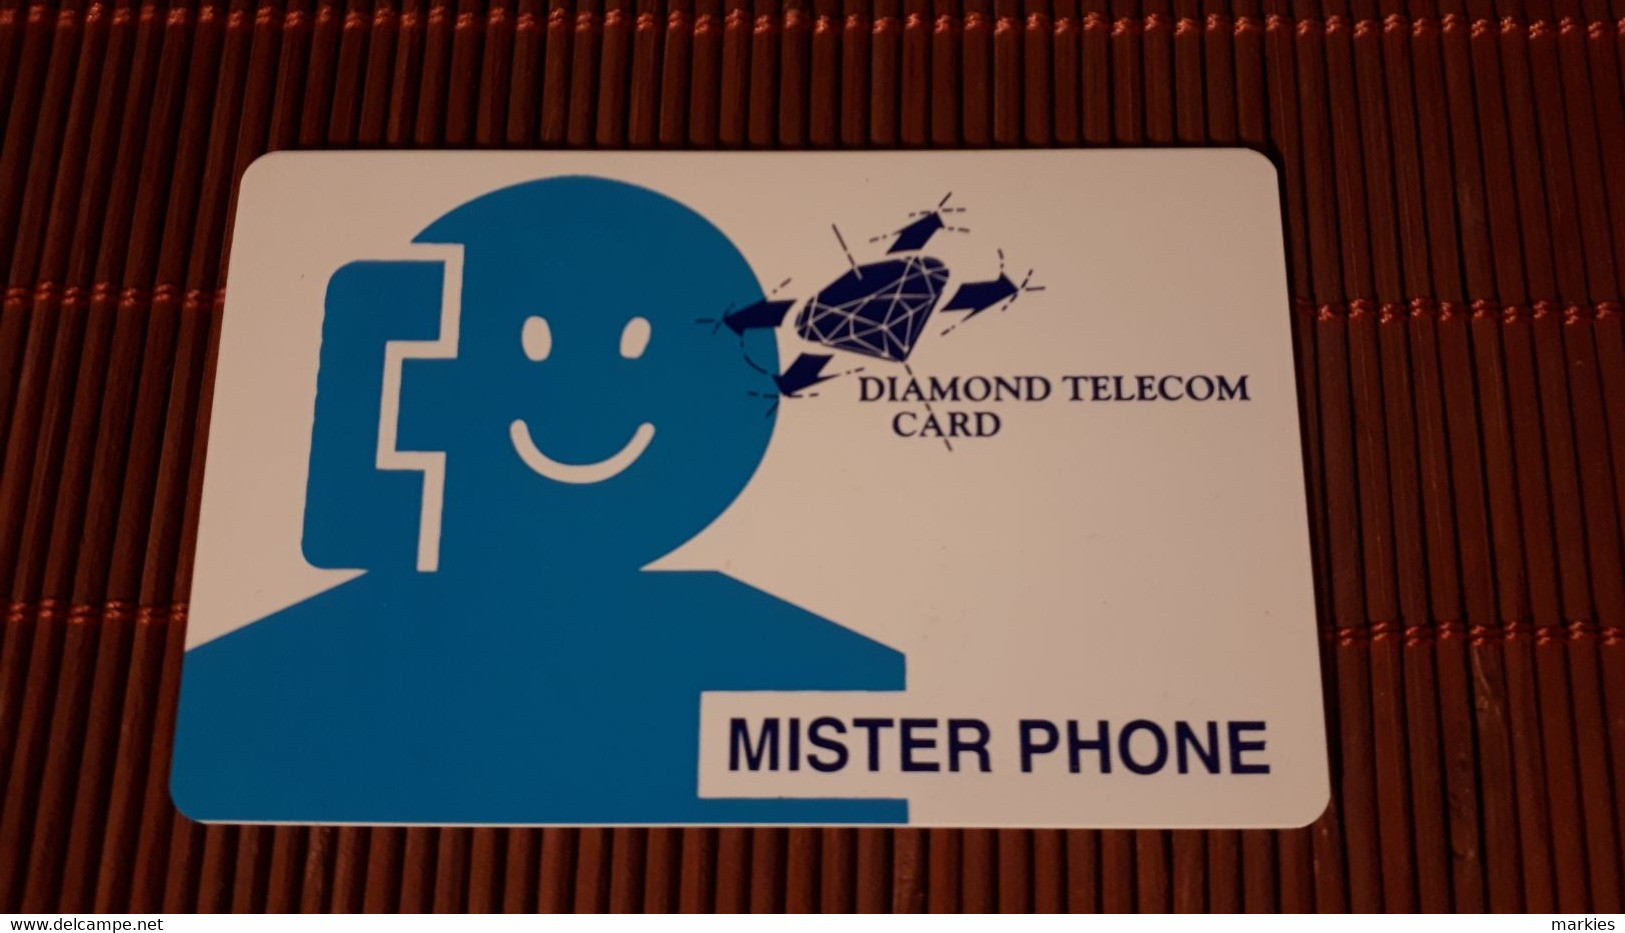 Diamond Telecom 1 Prepaidcard Mister Phone (Mint,New) Expiry Dat 31-1-97  Rare - Origen Desconocido